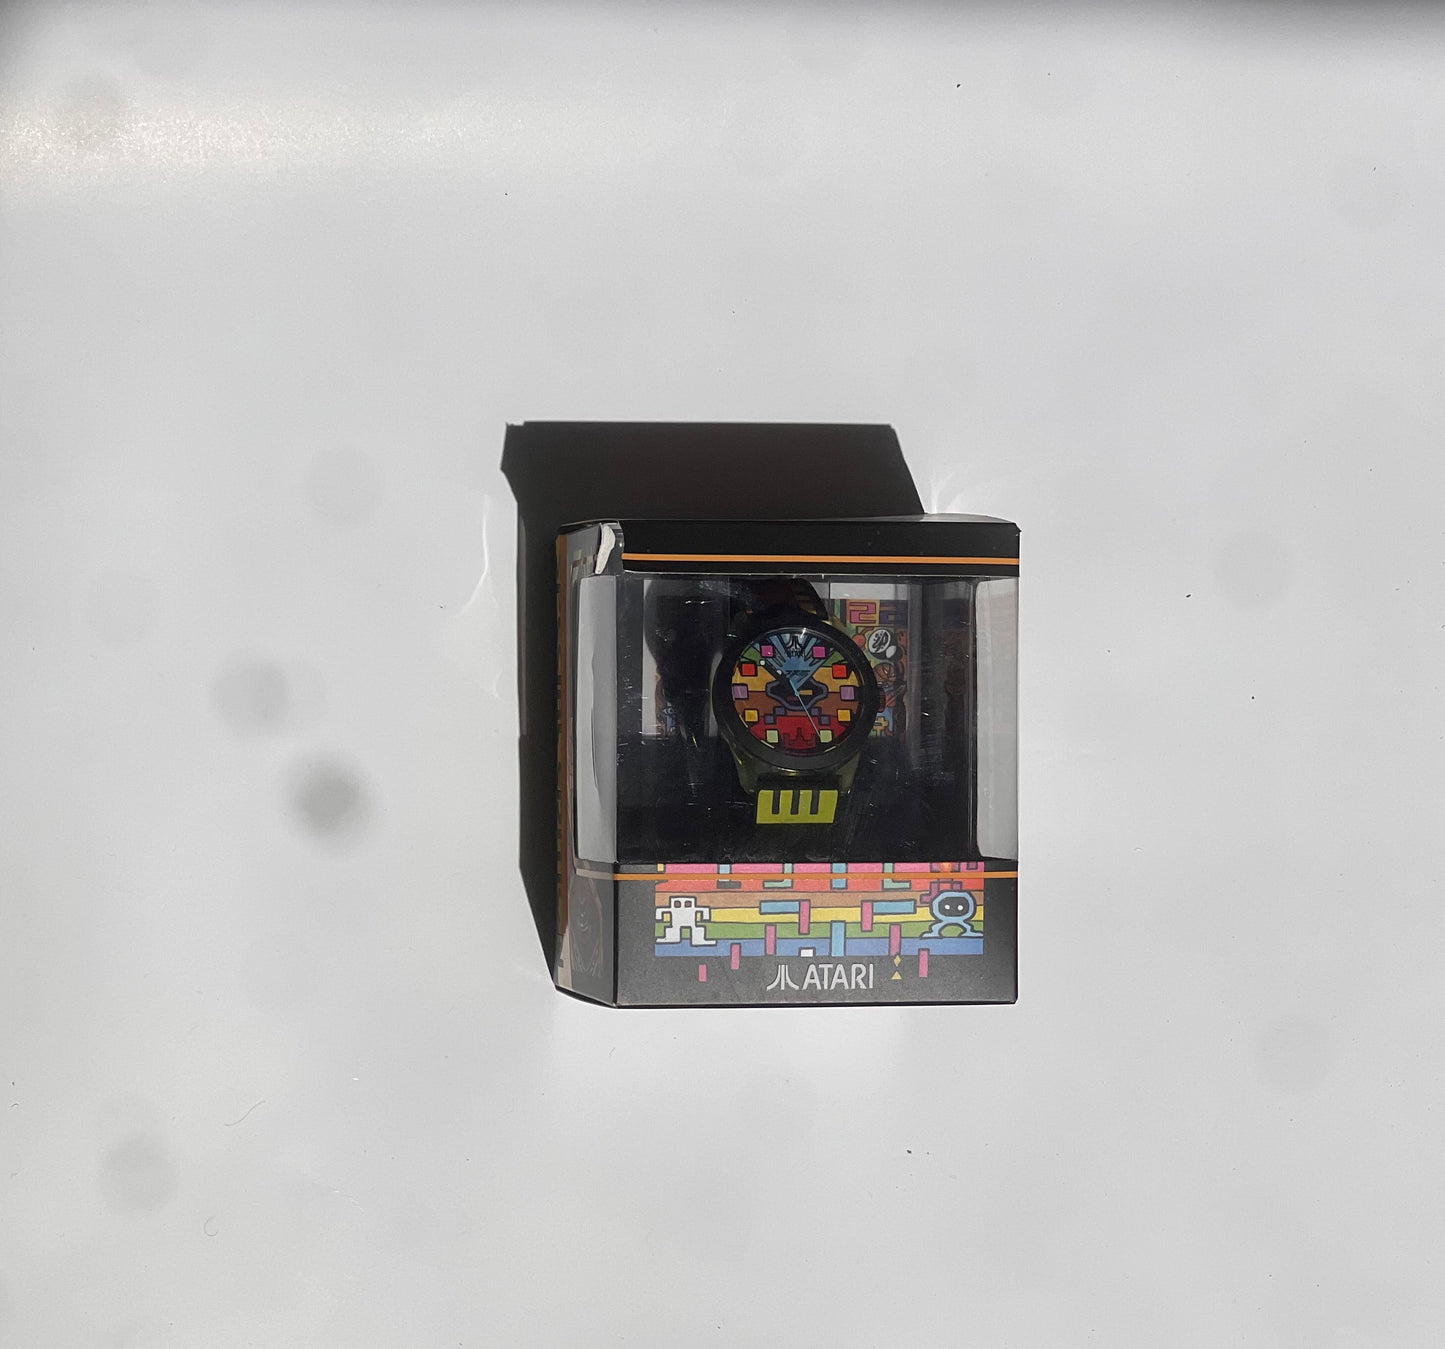 Atari Limited Edition Watch